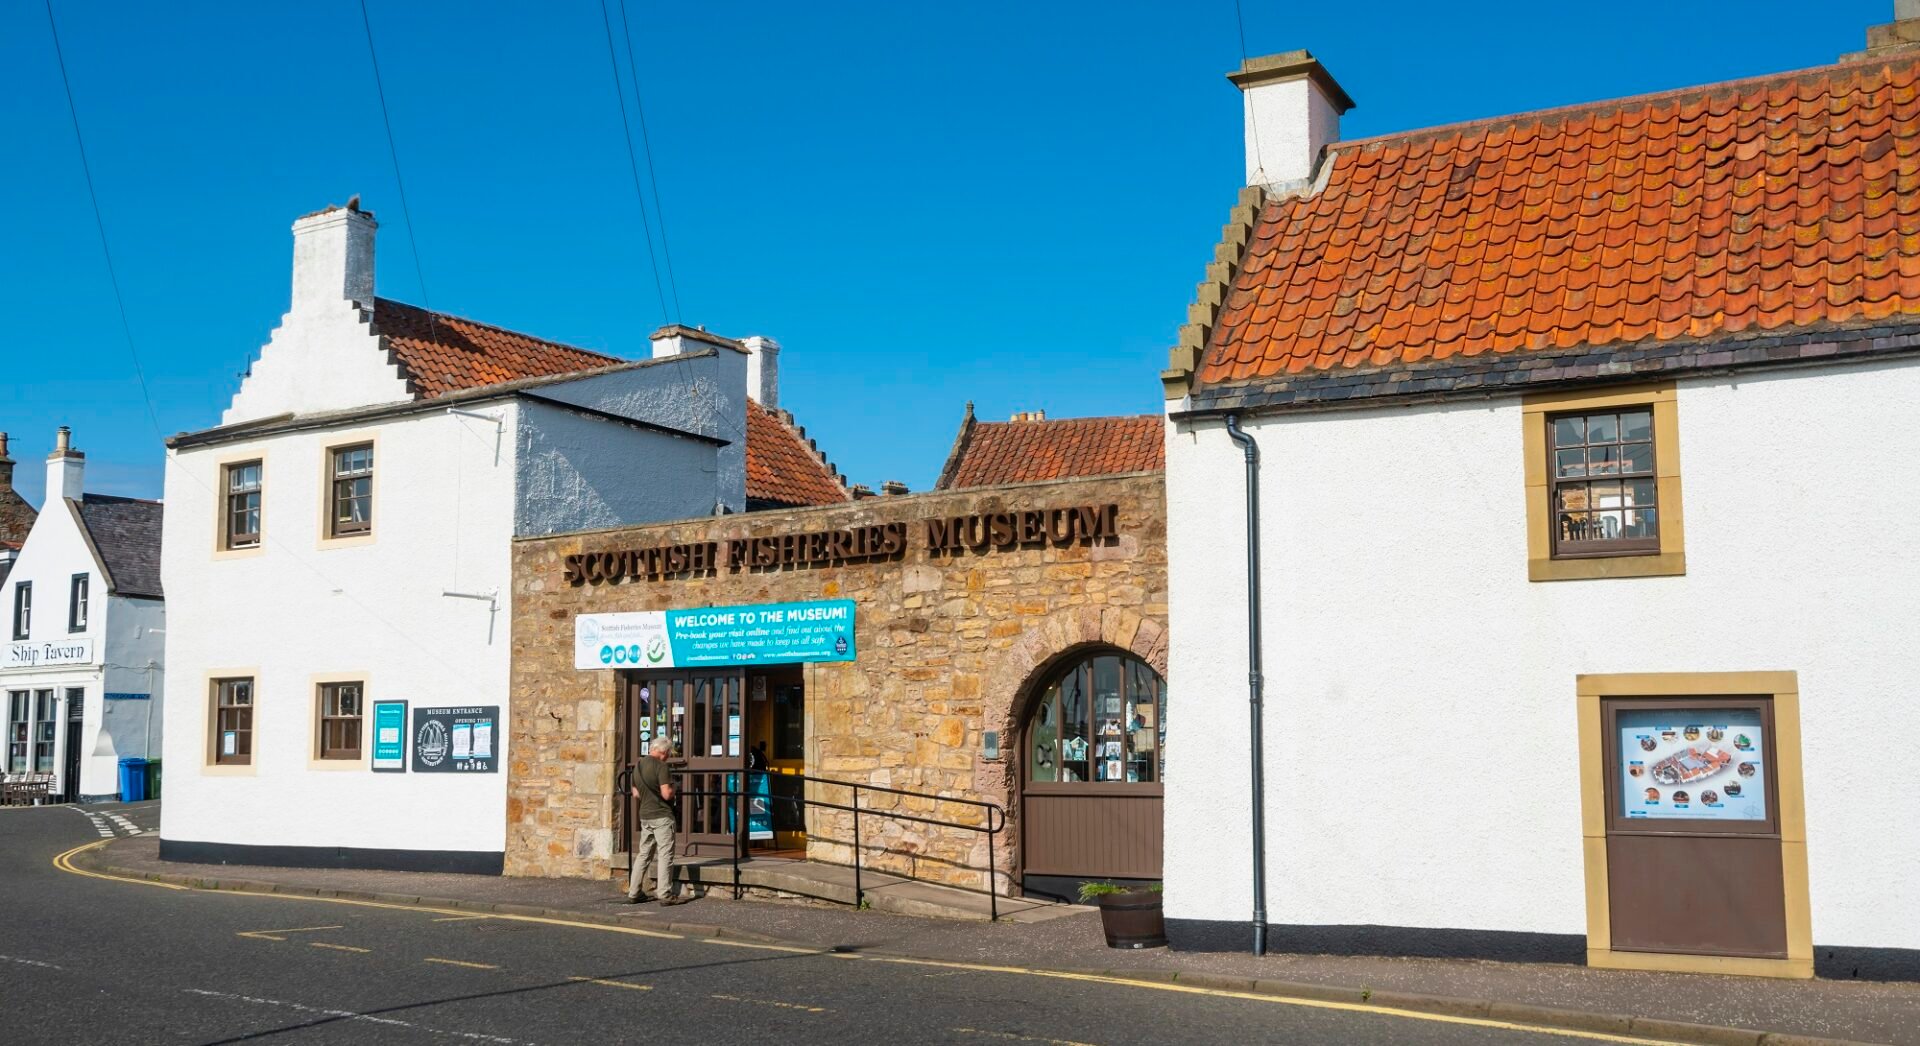 Scottish Fisheries Museum Anstruther